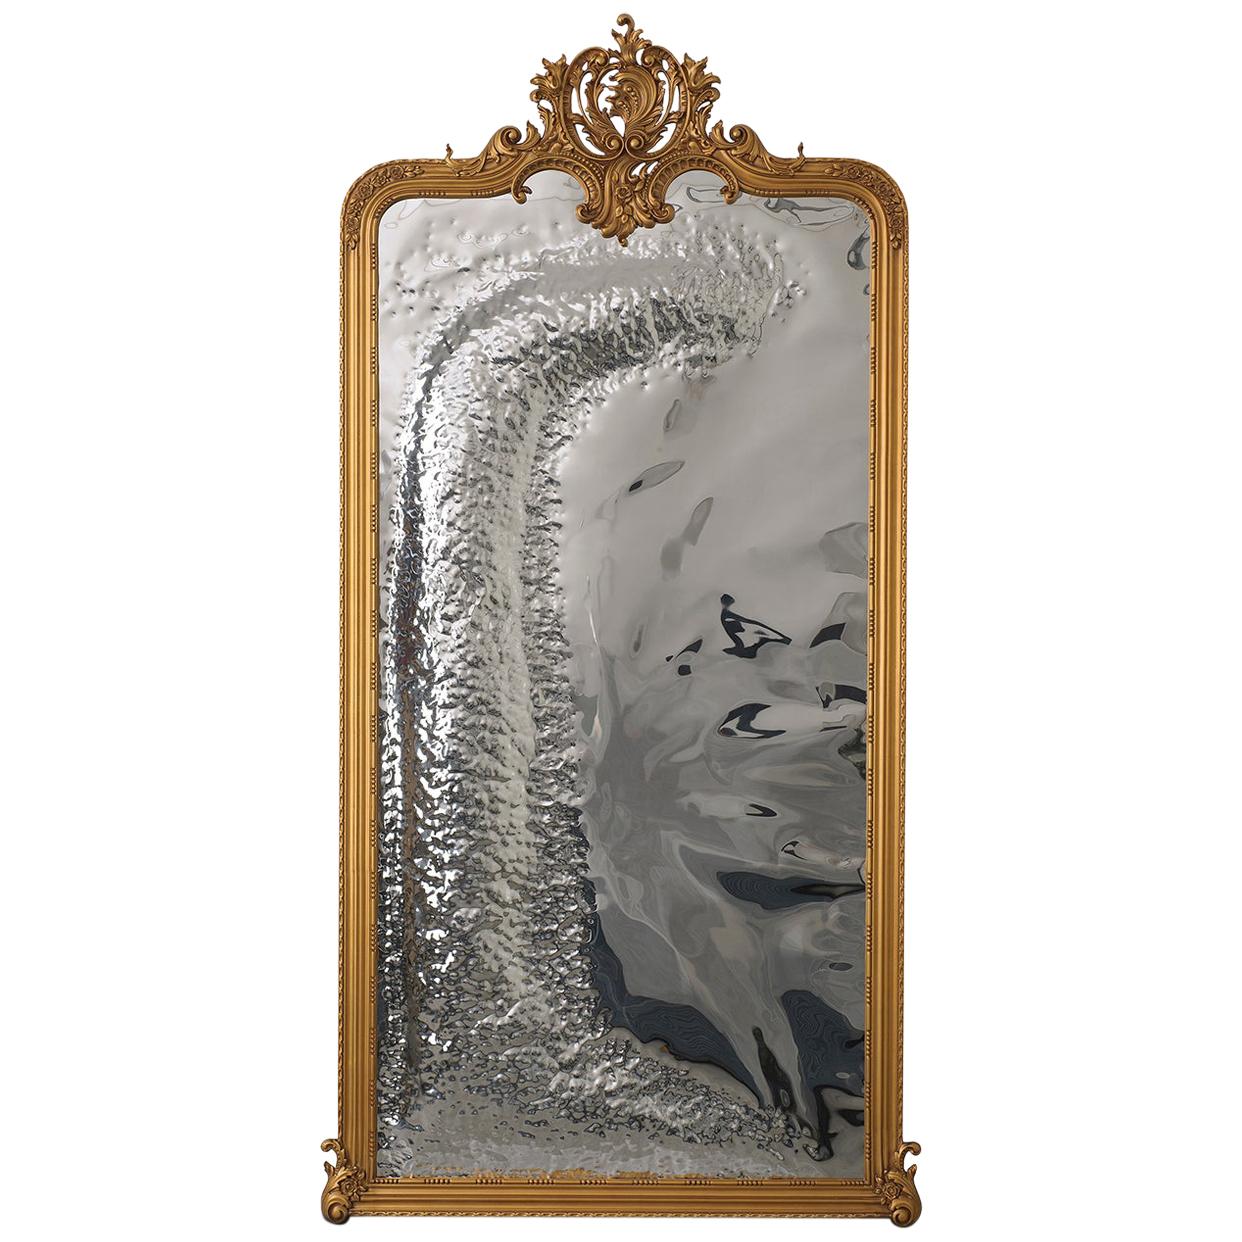 Modern Classic Imaginarium Mirror, Carved Wood and Gold Leaf Patina, Metal Work